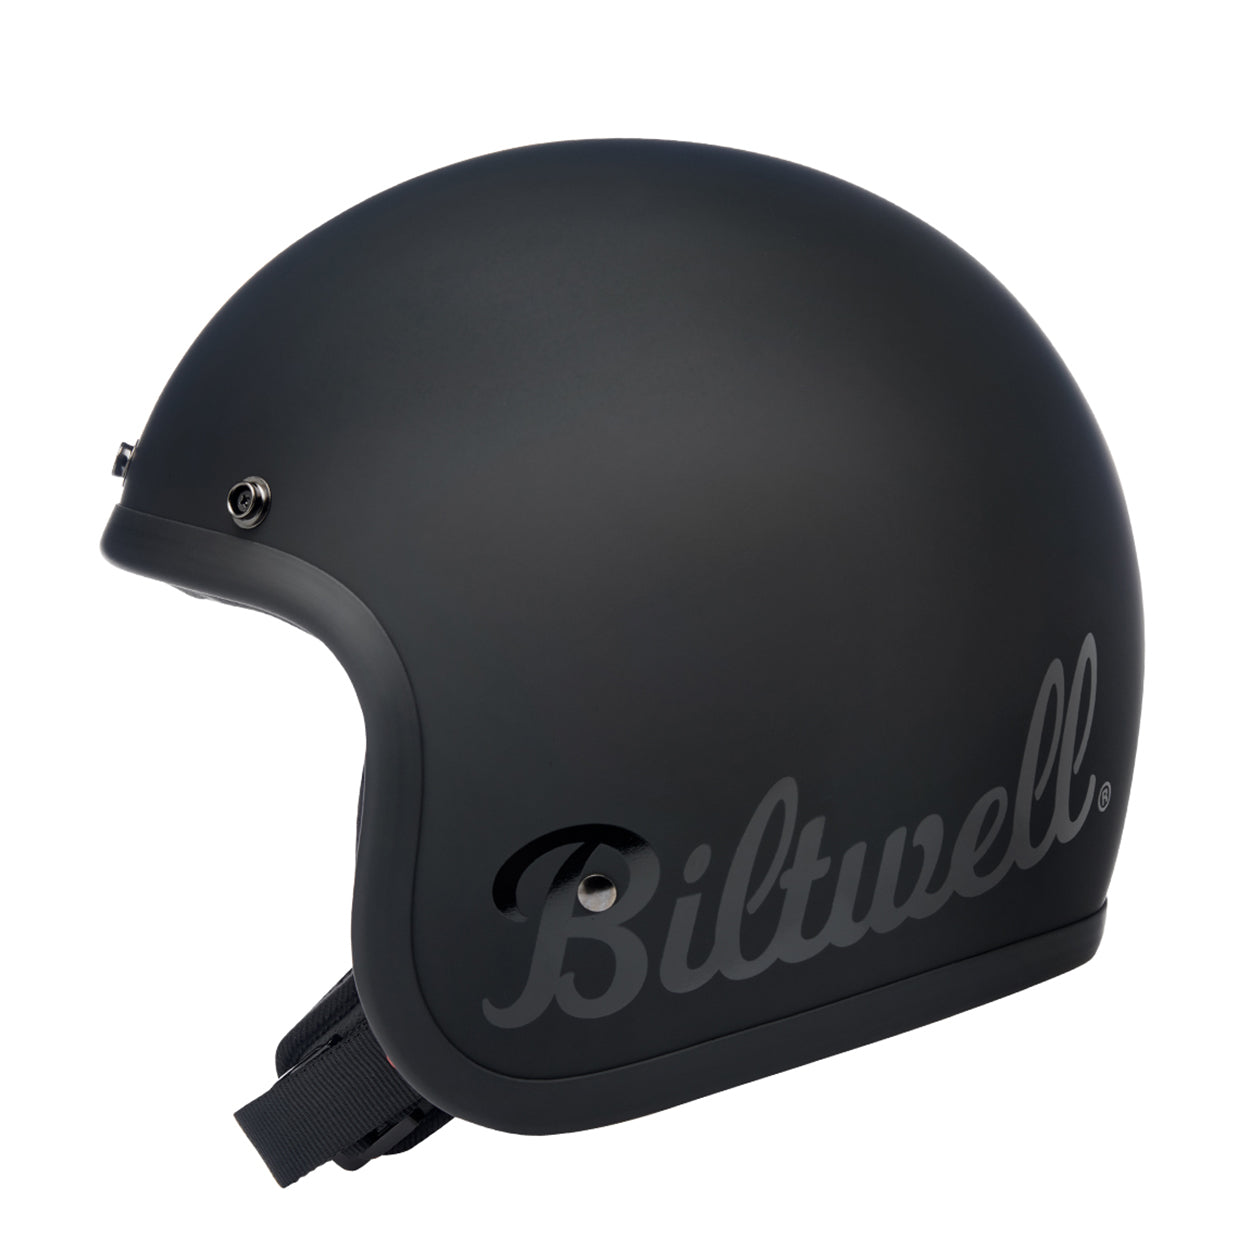 CLOSEOUT Bonanza Helmet - Flat Black Factory